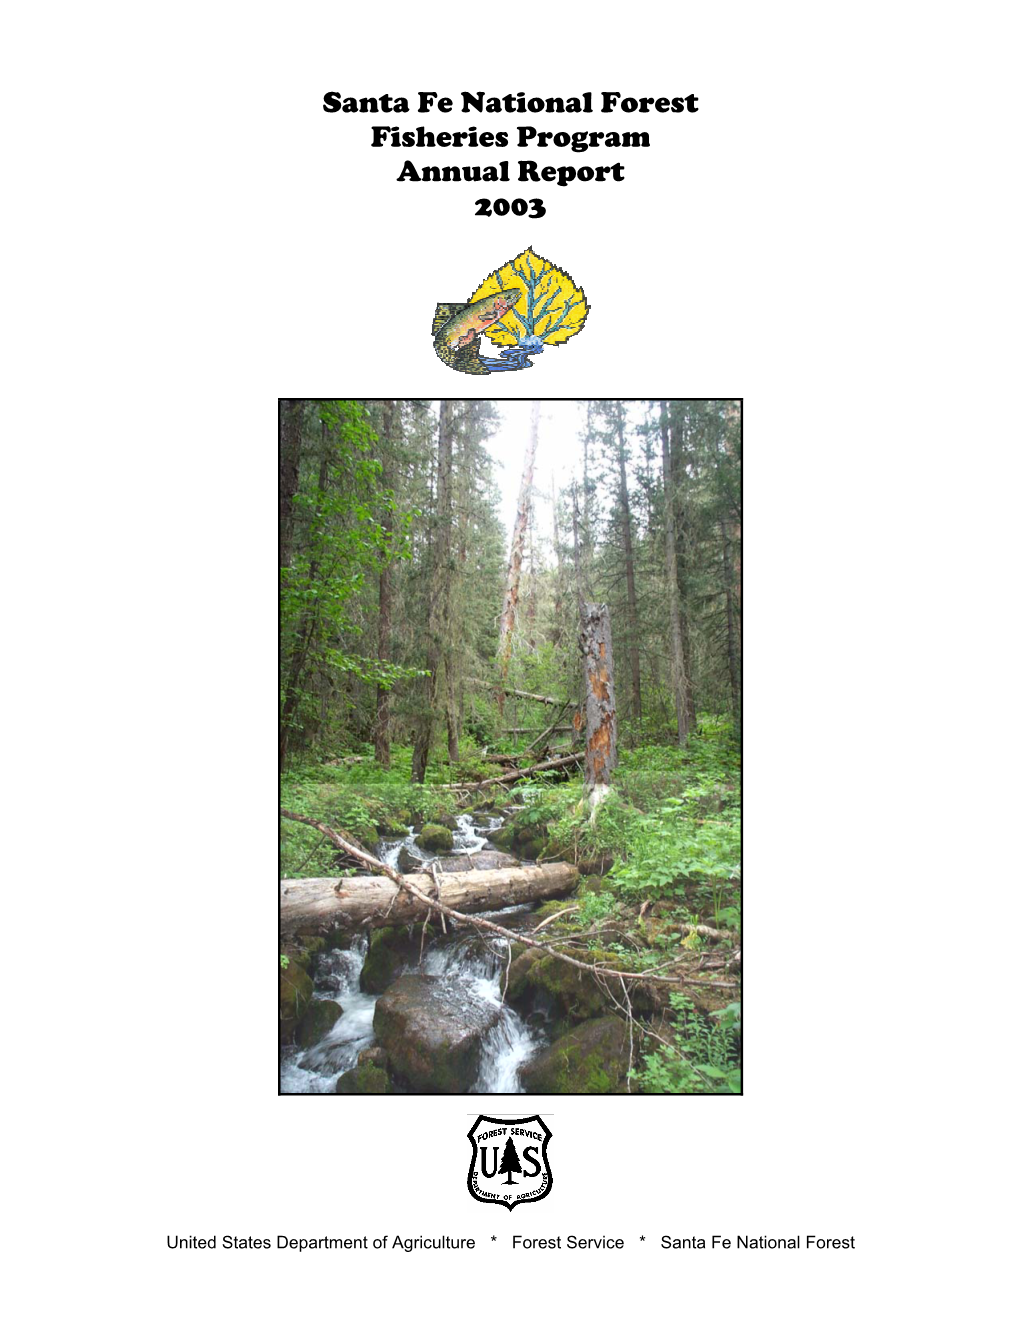 Santa Fe National Forest Fisheries Program Annual Report 2003